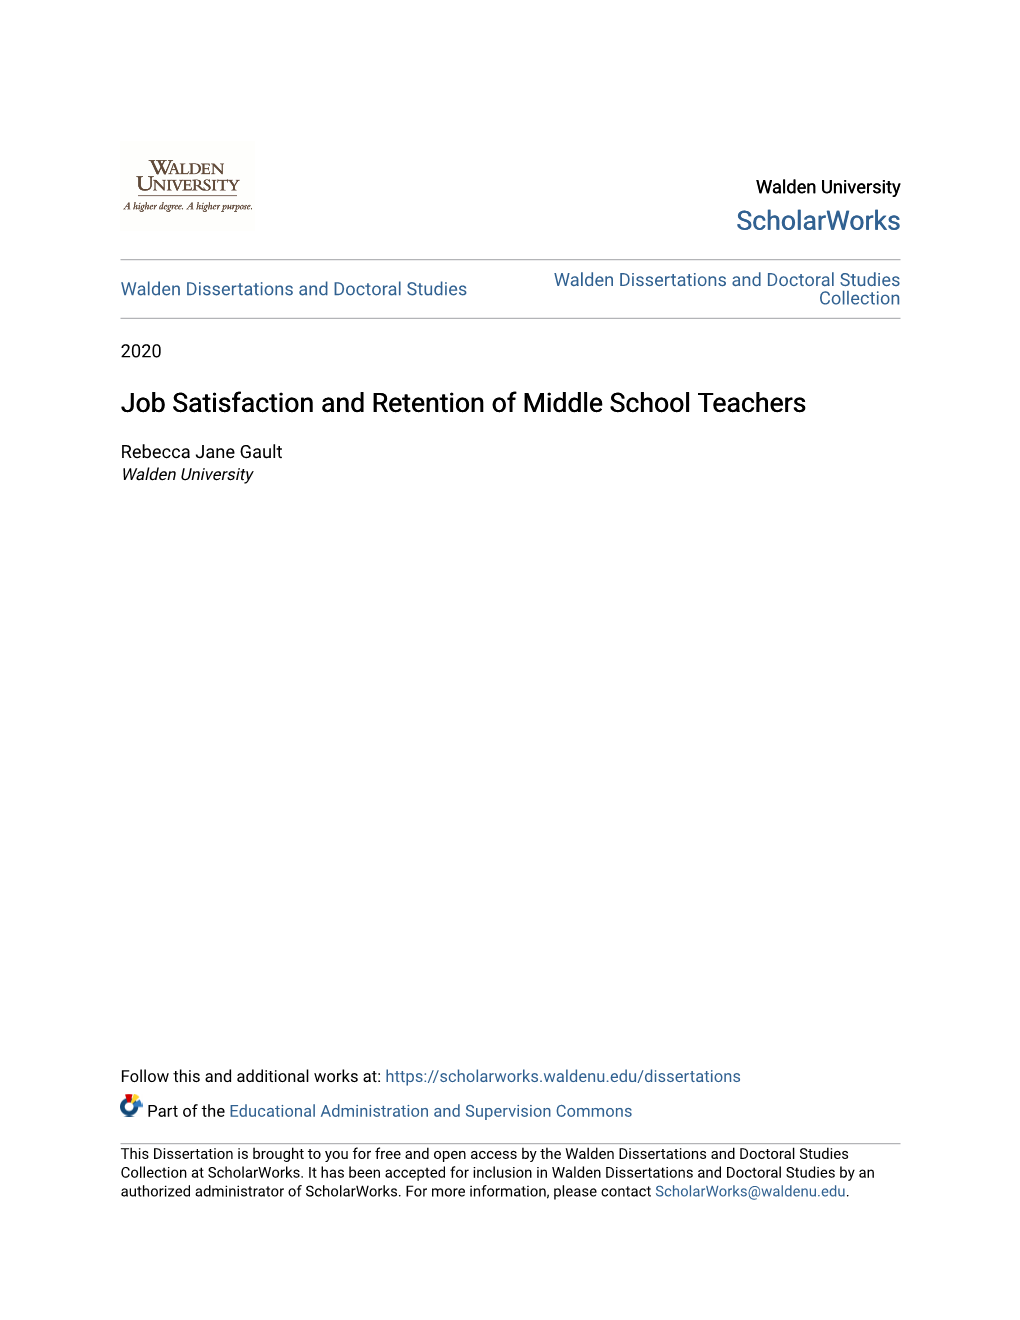 Job Satisfaction and Retention of Middle School Teachers